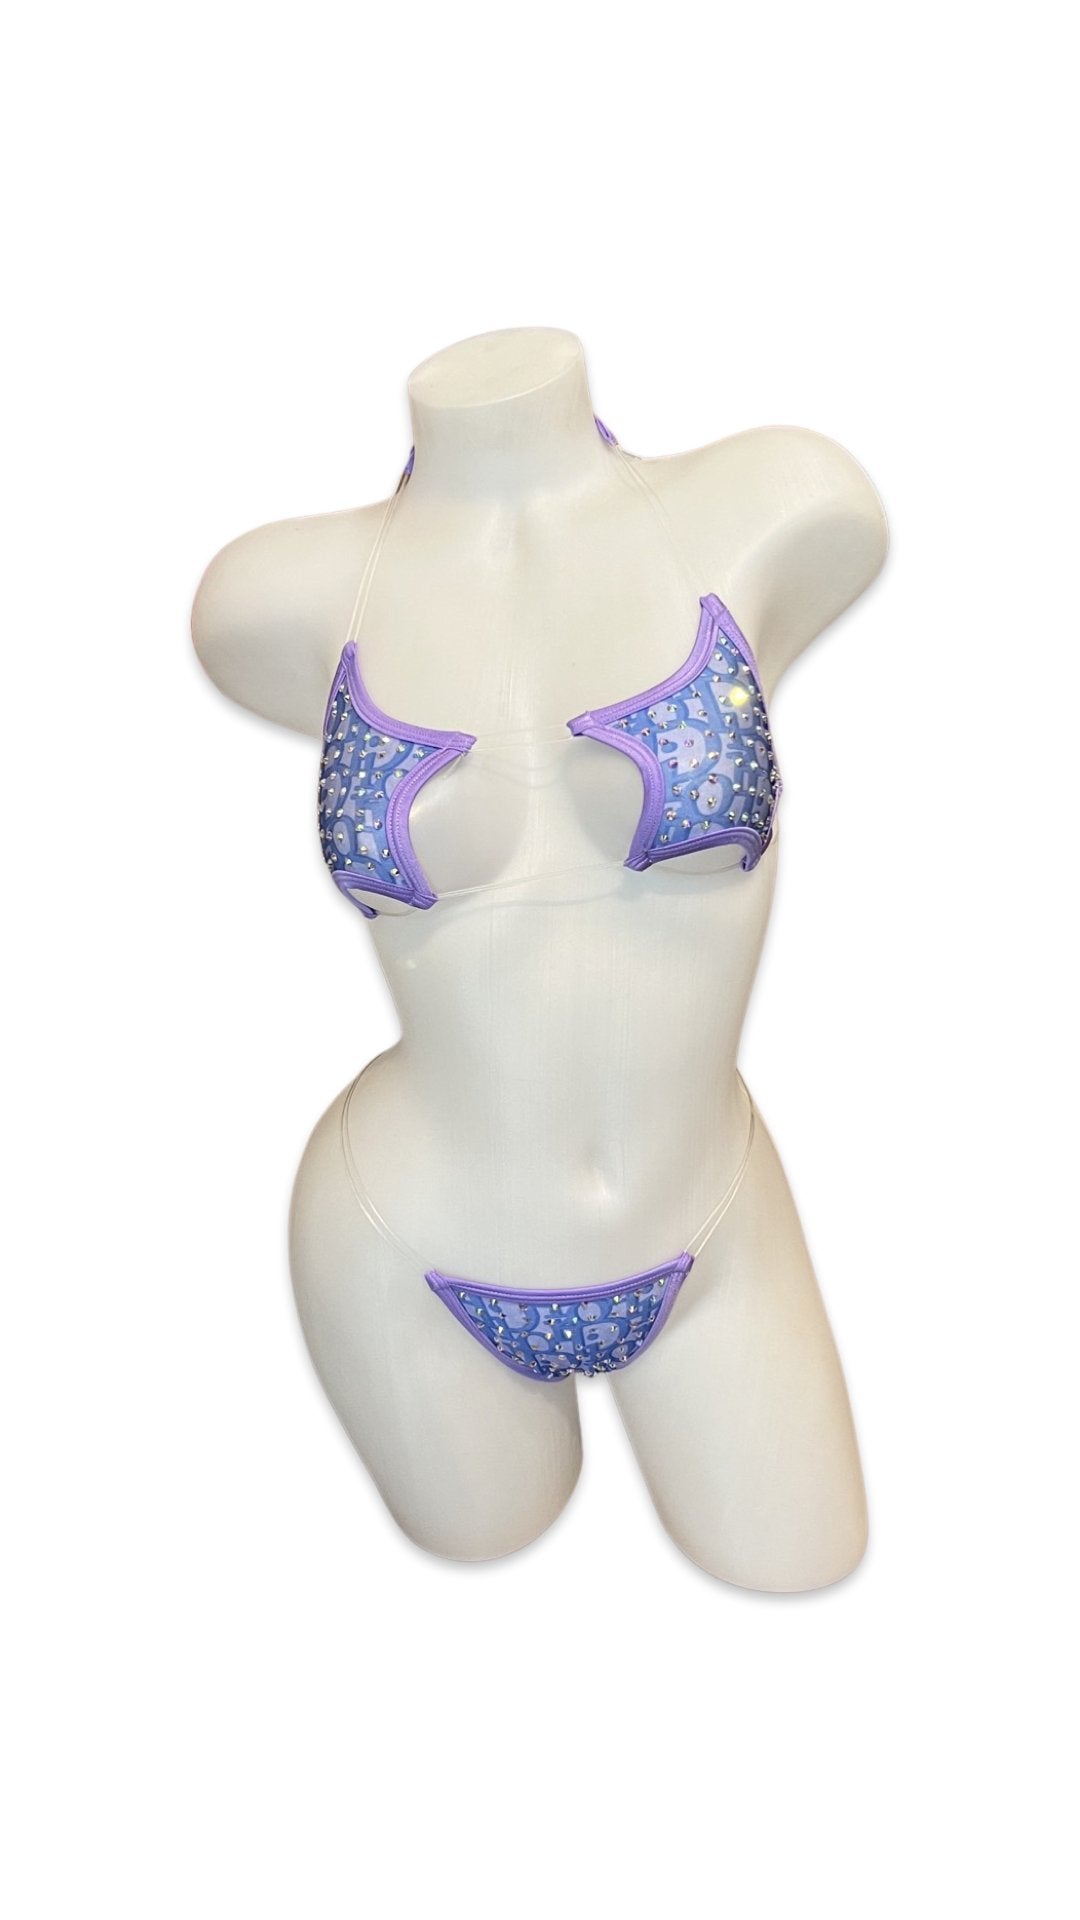 Rhinestone Star Bikini - Purple Design - Model Express VancouverBikini